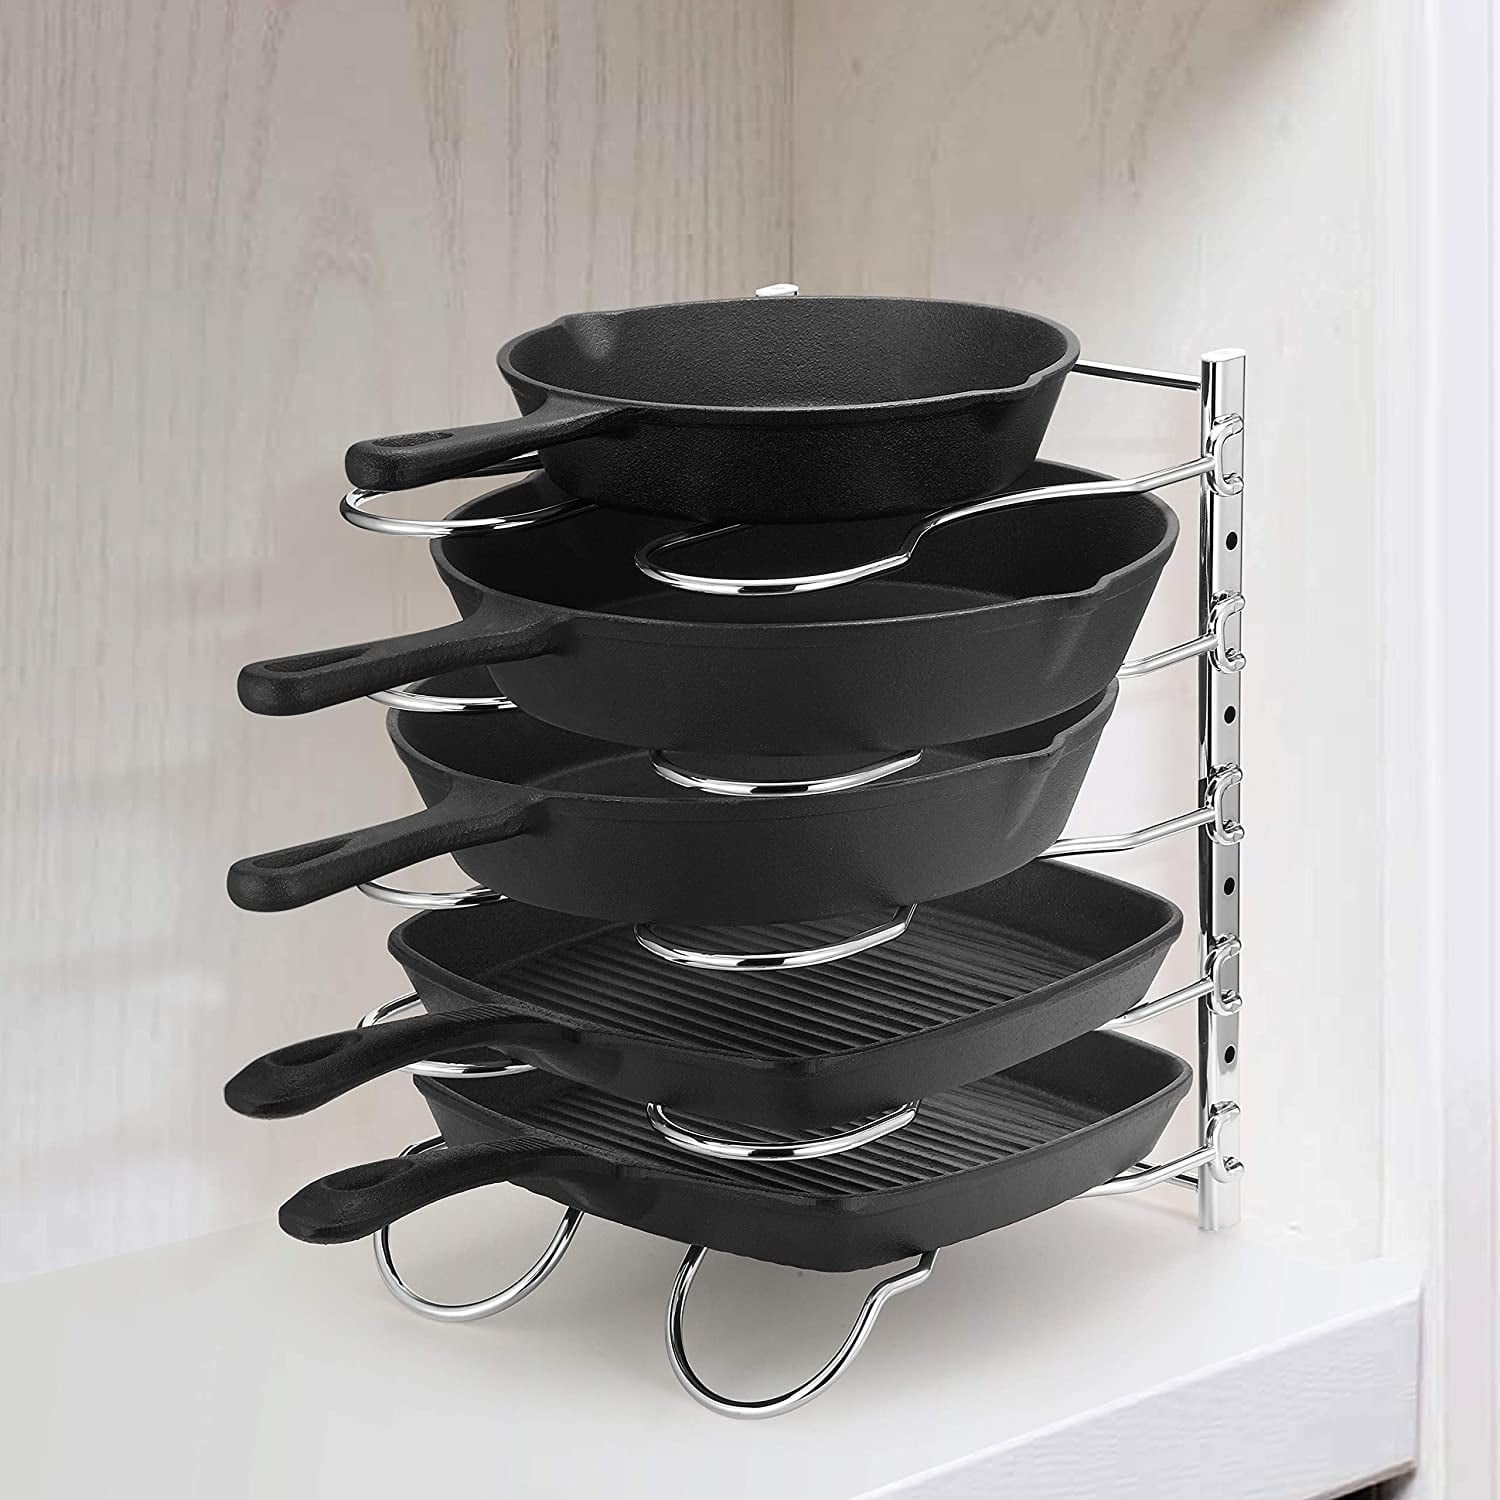 Chrome pot lid rack holder hanger storage FREE P&P 